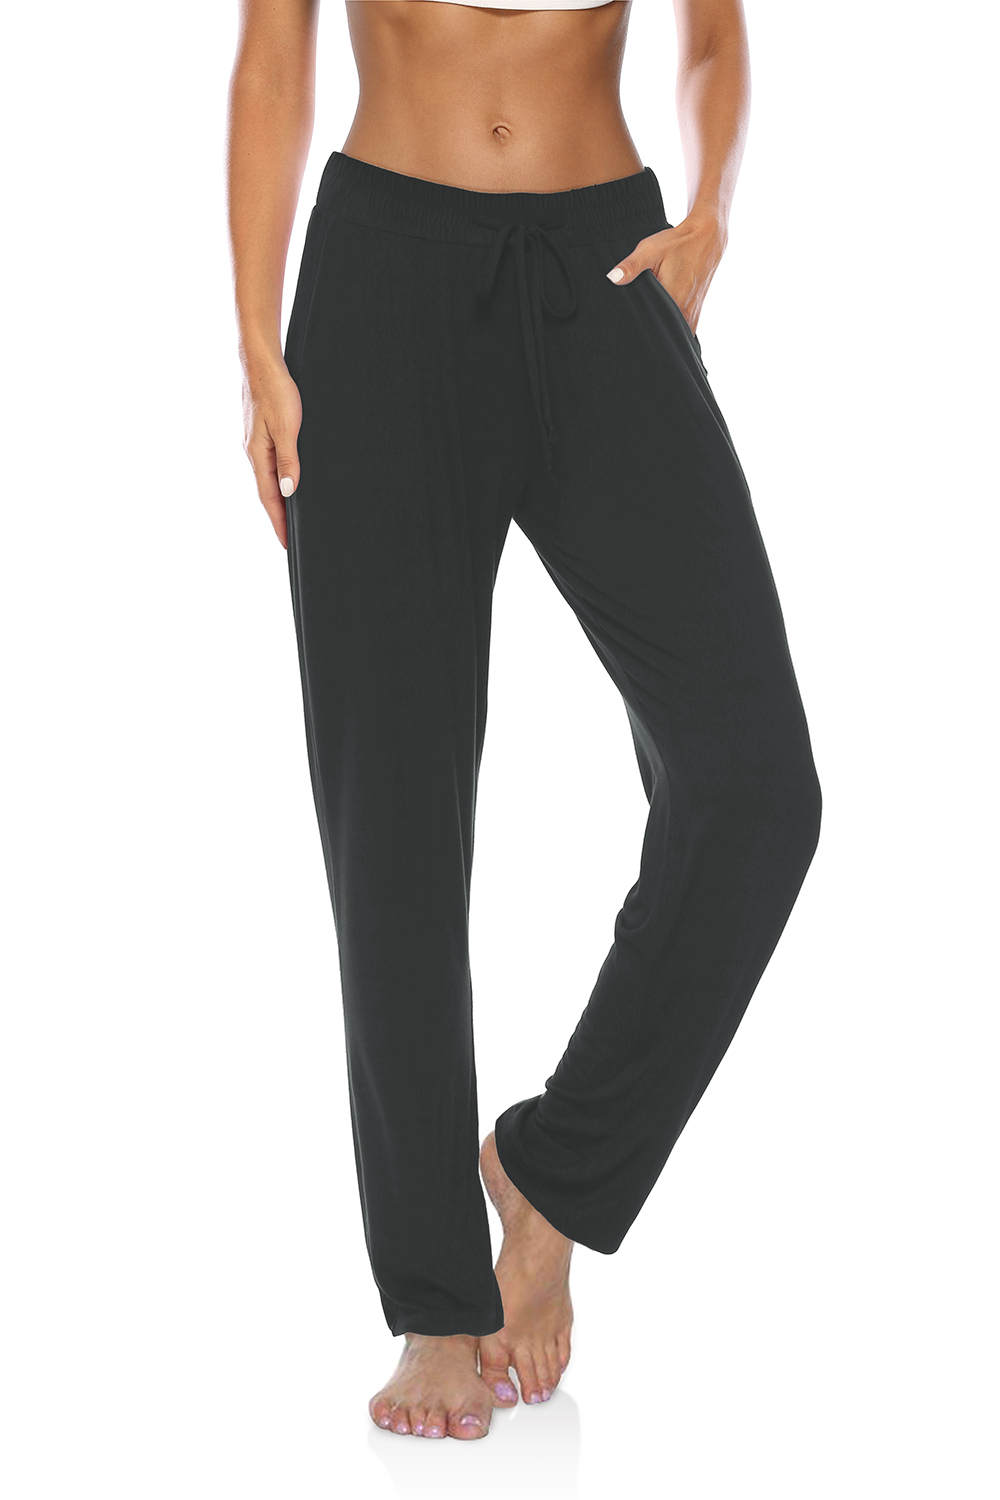 BALEAF Yoga Pants for Women Capris High Waist Leggings with Pockets Wide  Leg Exercise Workout Crop Straight Open Bottom, Black, X-Large